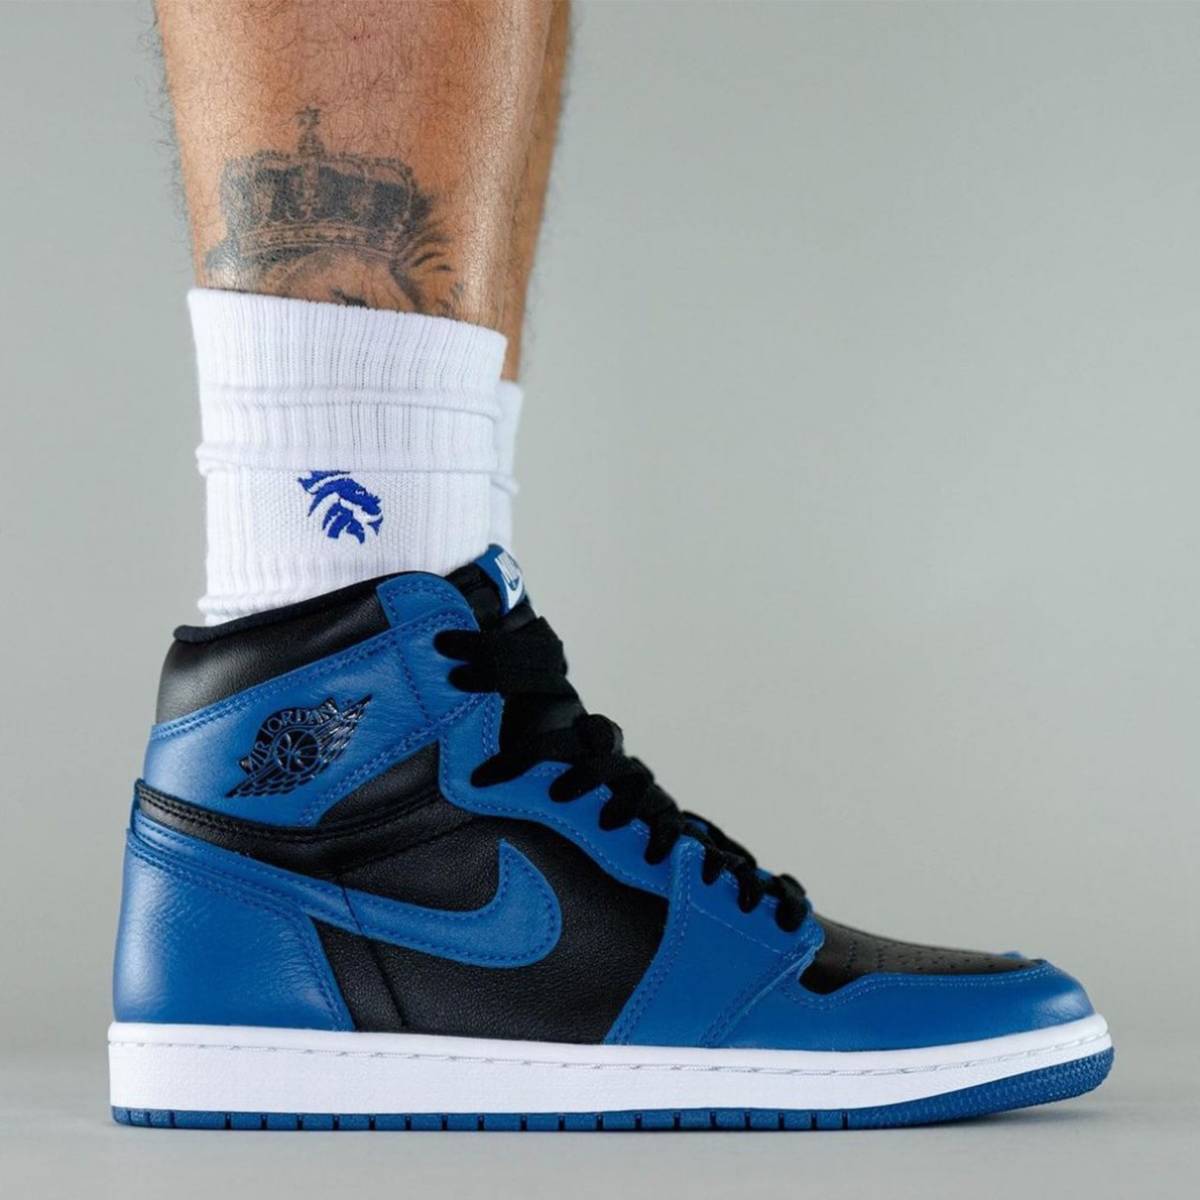 Nike Air Jordan 1 High OG Dark Marina Blue ナイキ エアジョーダン 1 ハイ OG ダークマリーナブルー 555088-404 スニーカー 28cm_画像9